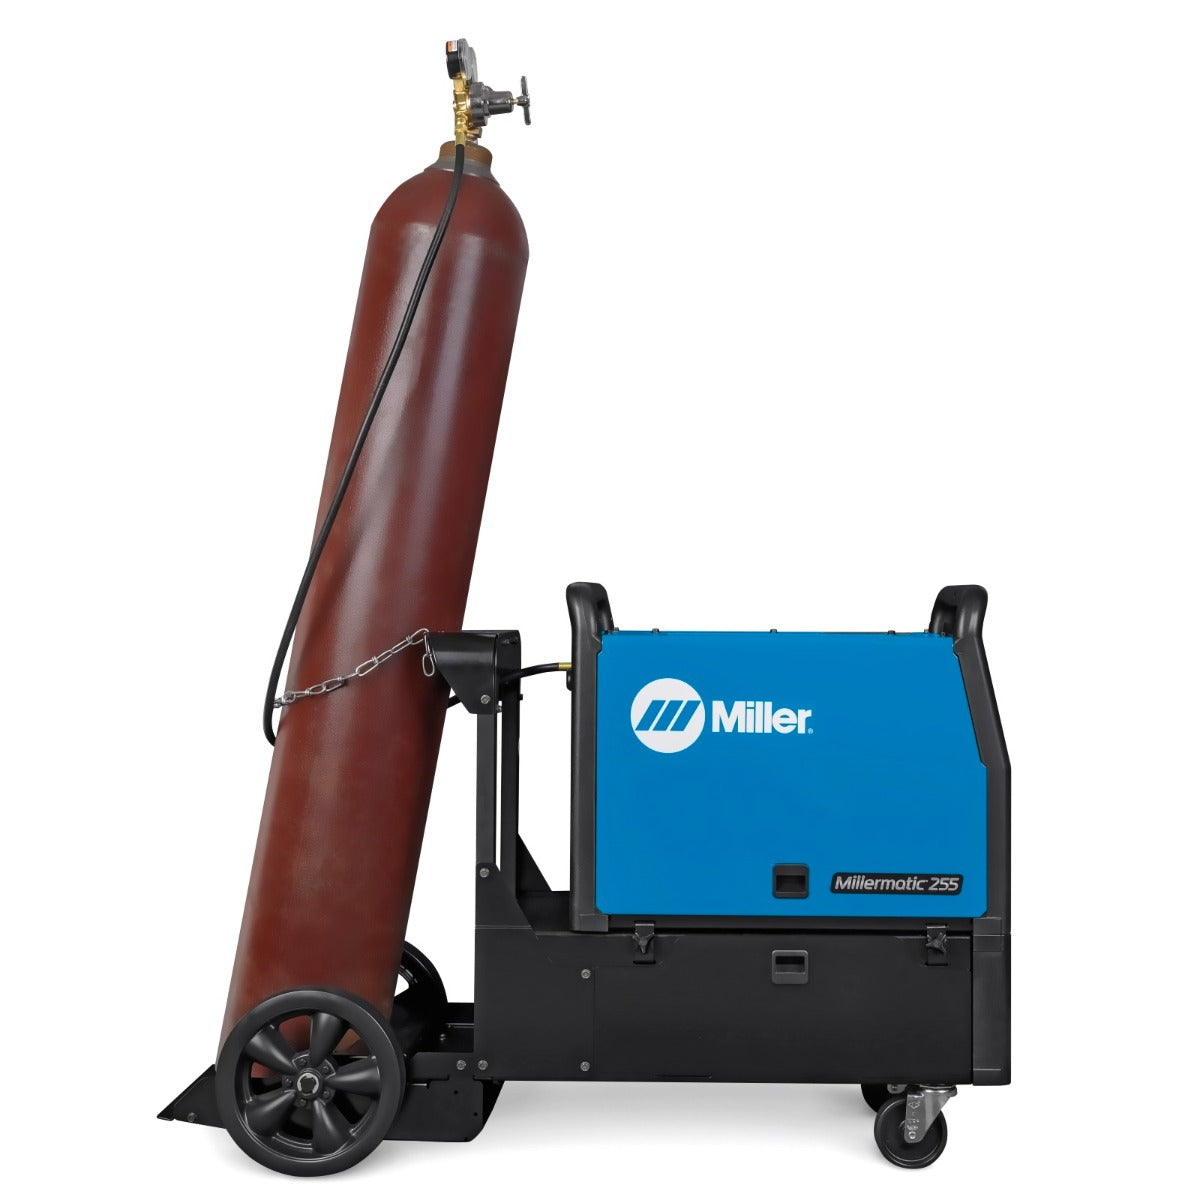 Miller Millermatic 255 MIG/Pulsed MIG Welder Fully Loaded (907734)